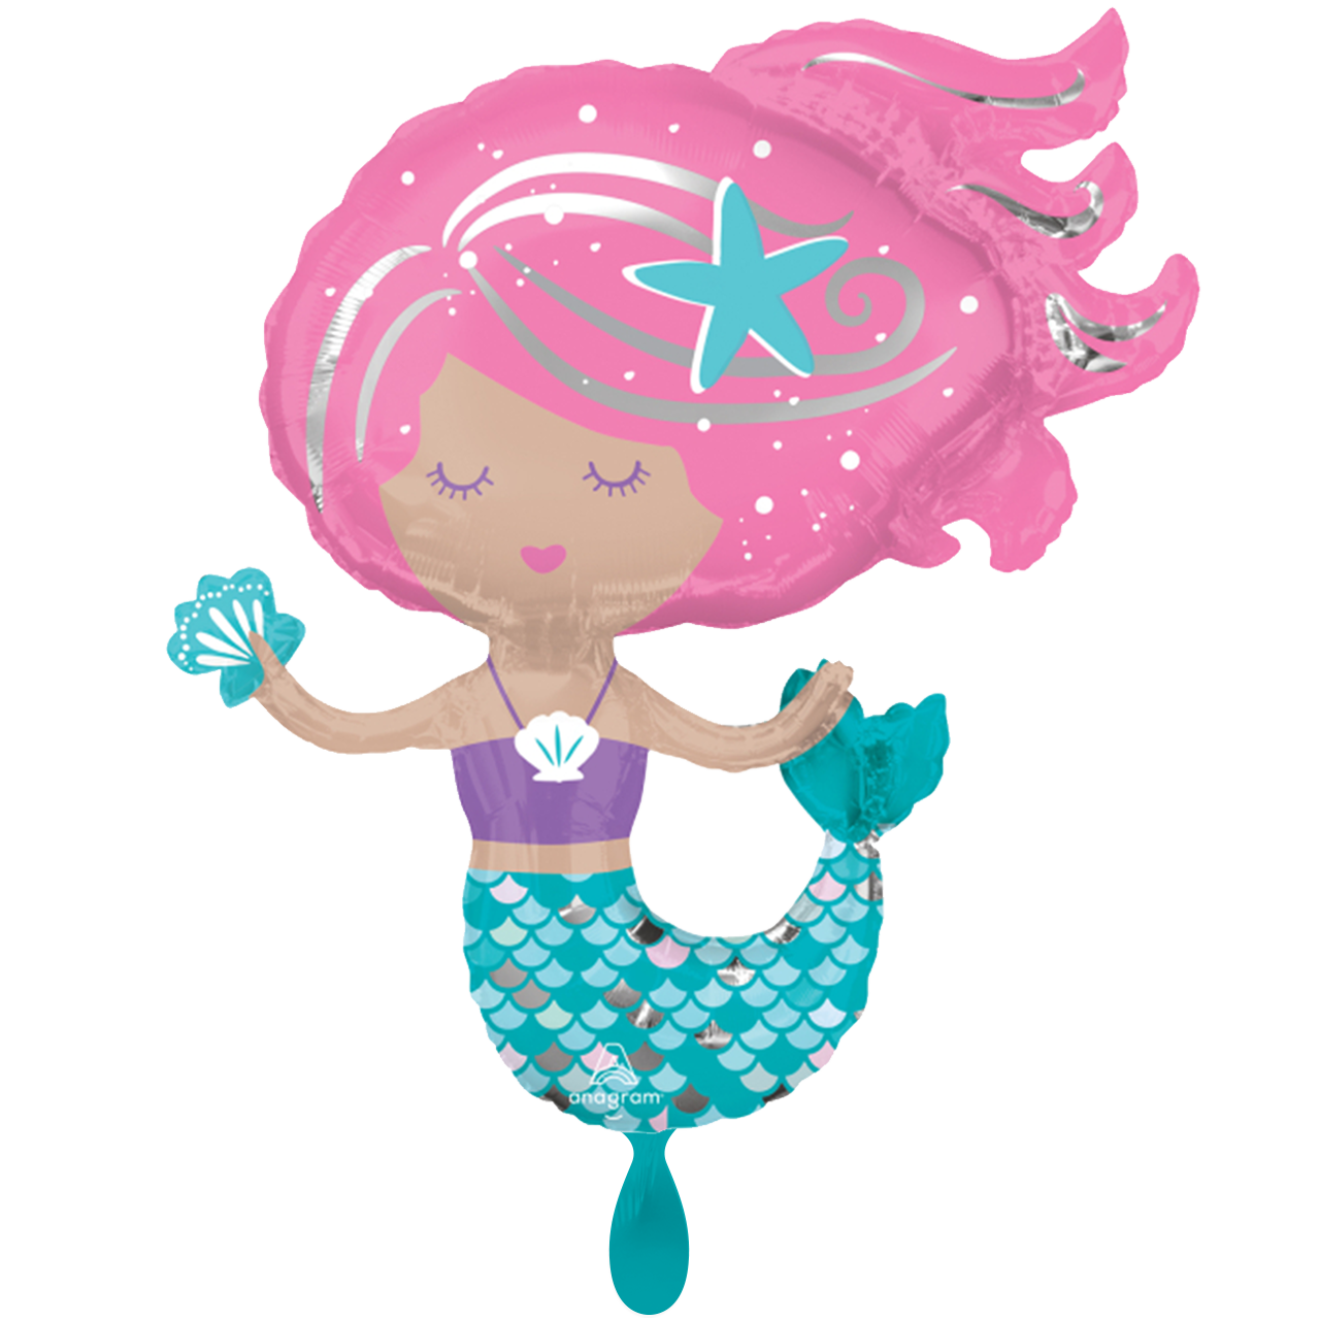 1 Balloon XXL - Shimmering Mermaid